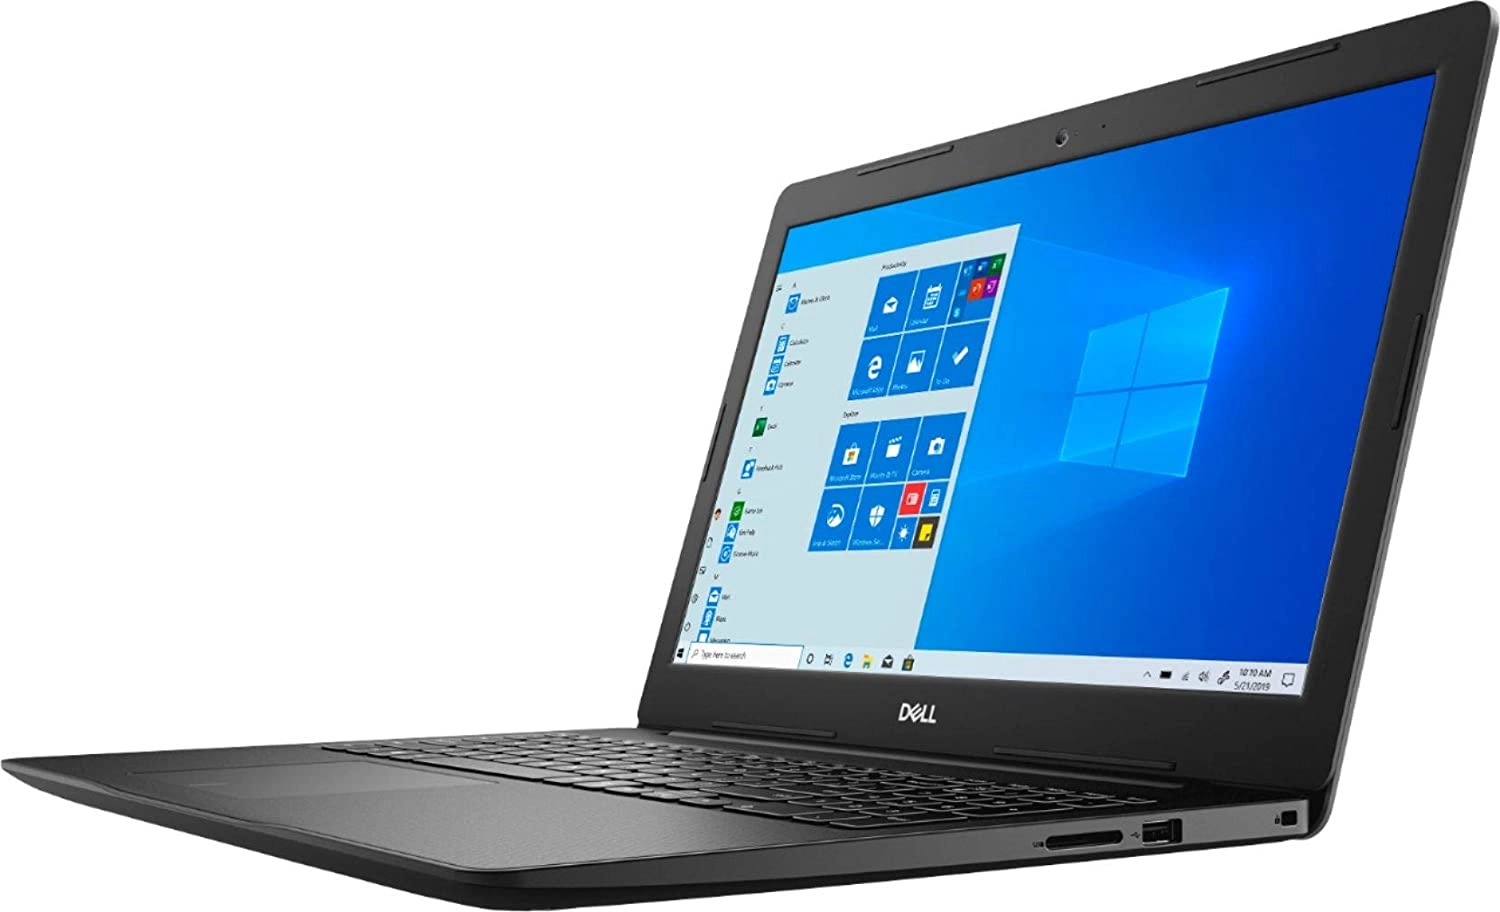 Dell 15-i3-1005g1 laptop image